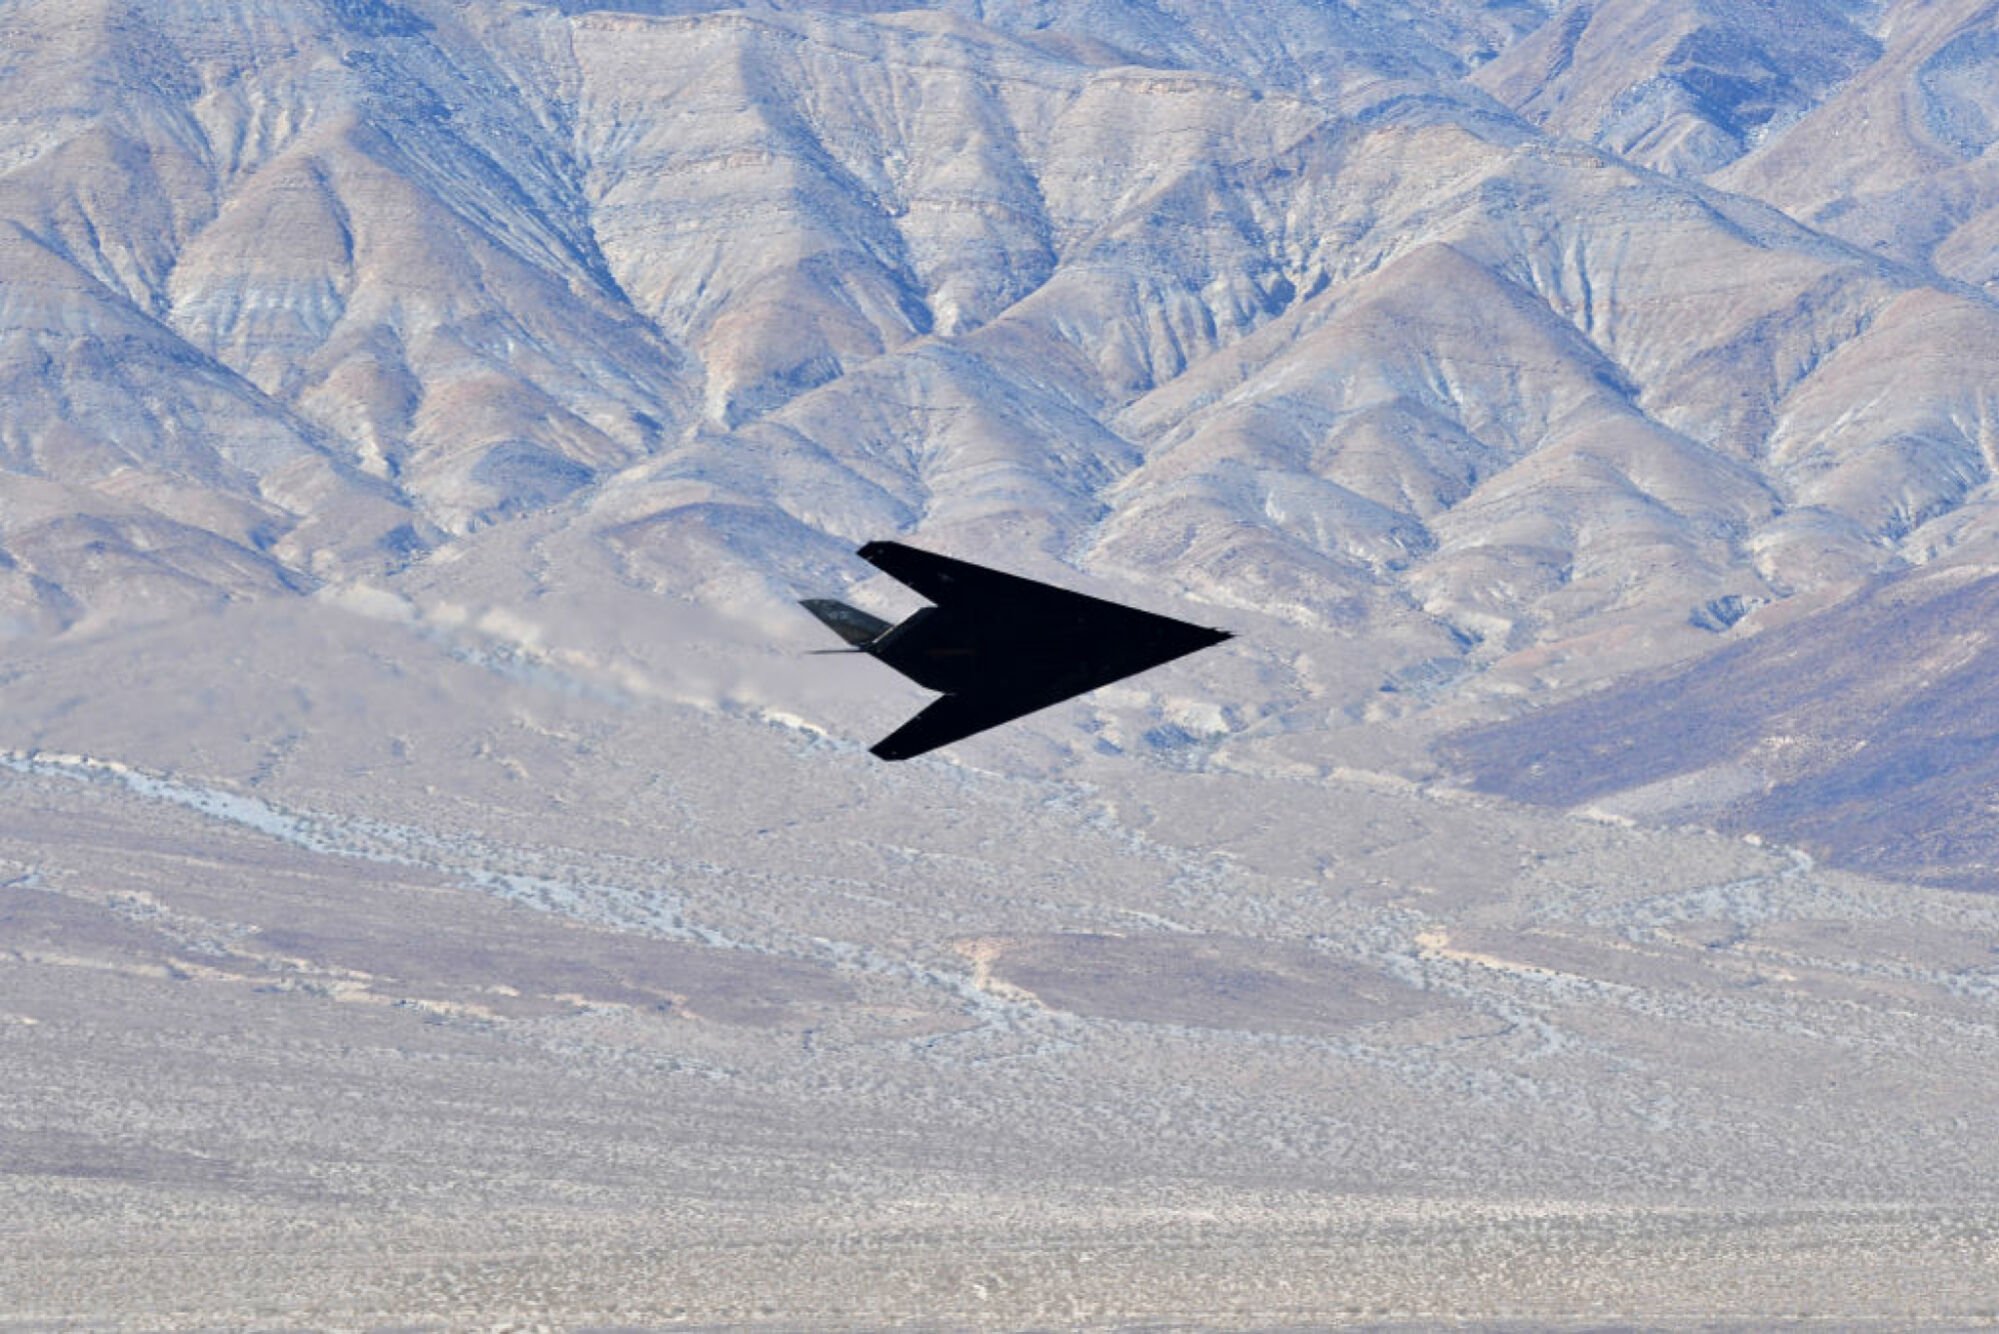 F-117 Nighthawk stealth fighter flying in Death Valley, California